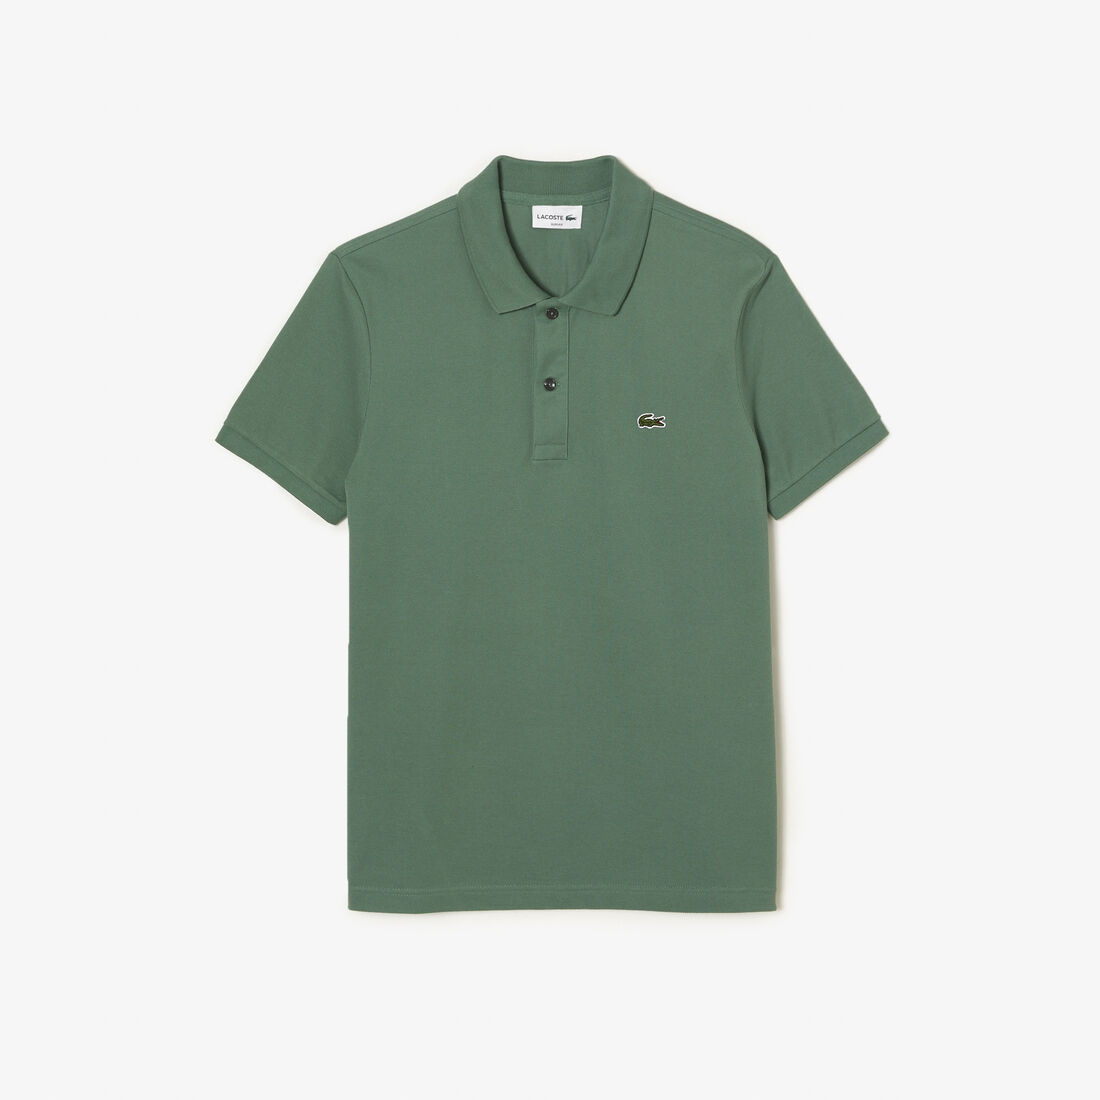 Lacoste Slim Fit In Petit Piqué Polo Shirts Herren Khaki Grün | CPAV-47809